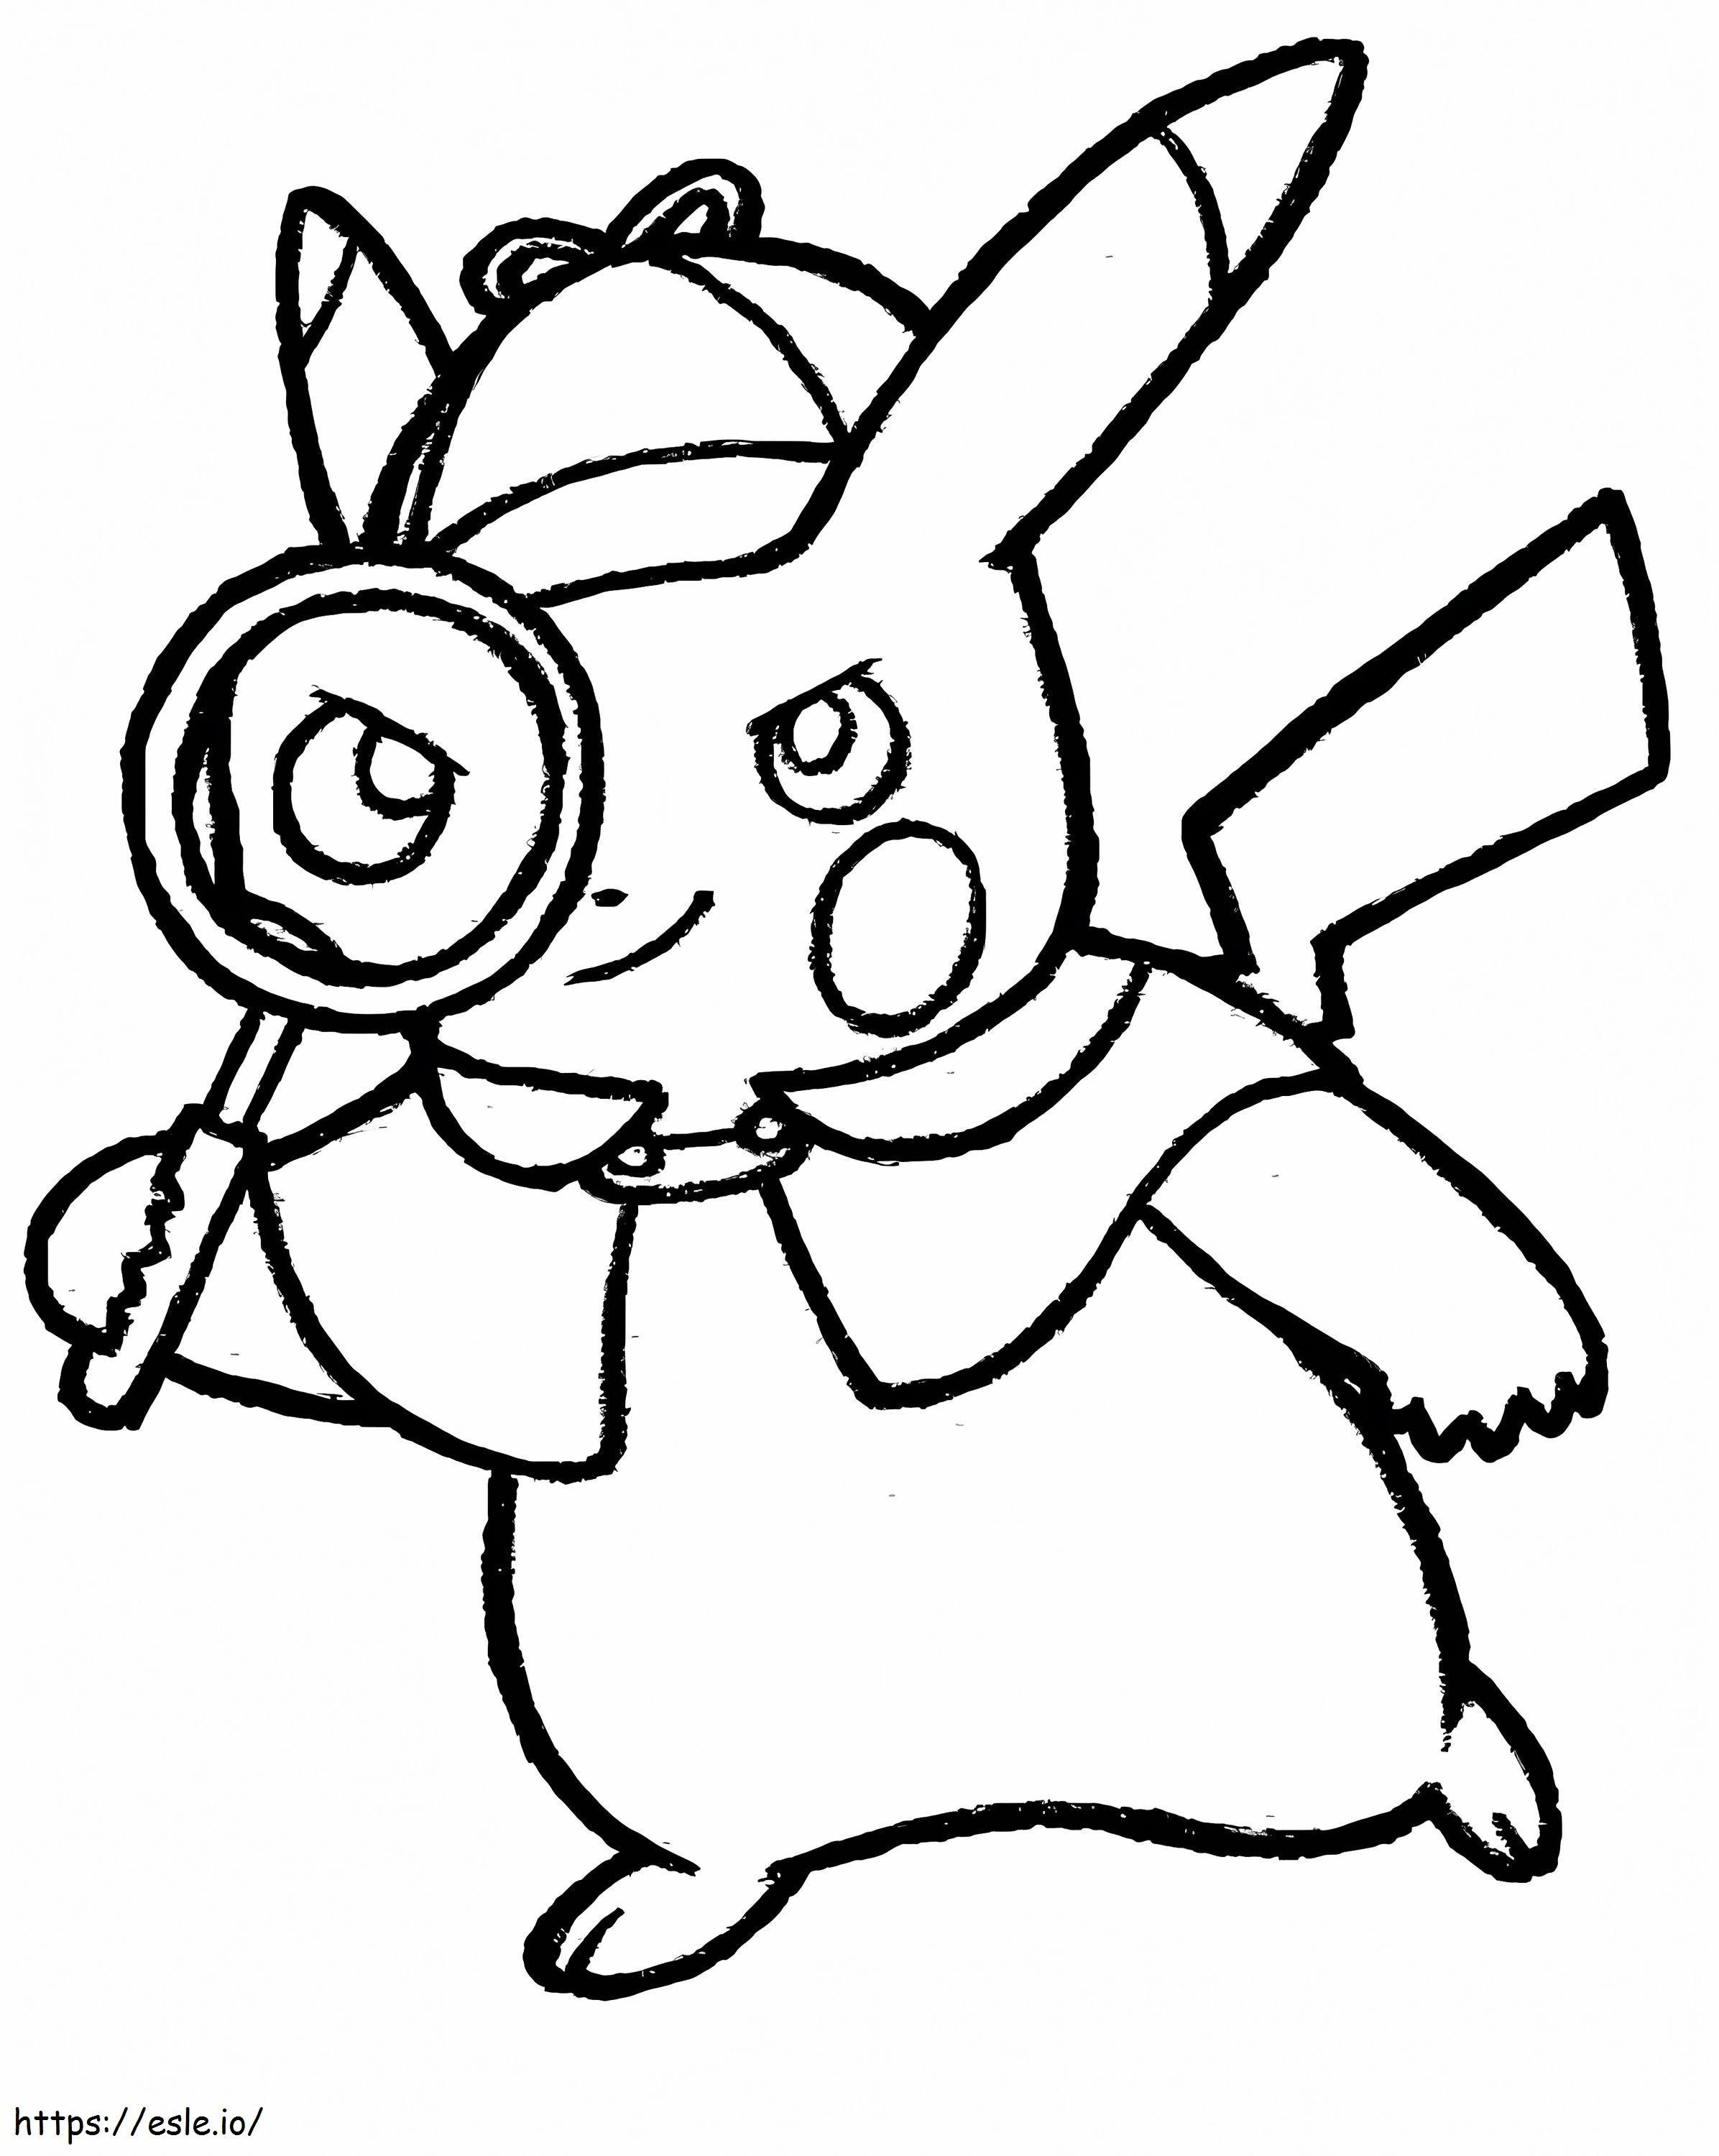 Detective Pikachu 1 coloring page